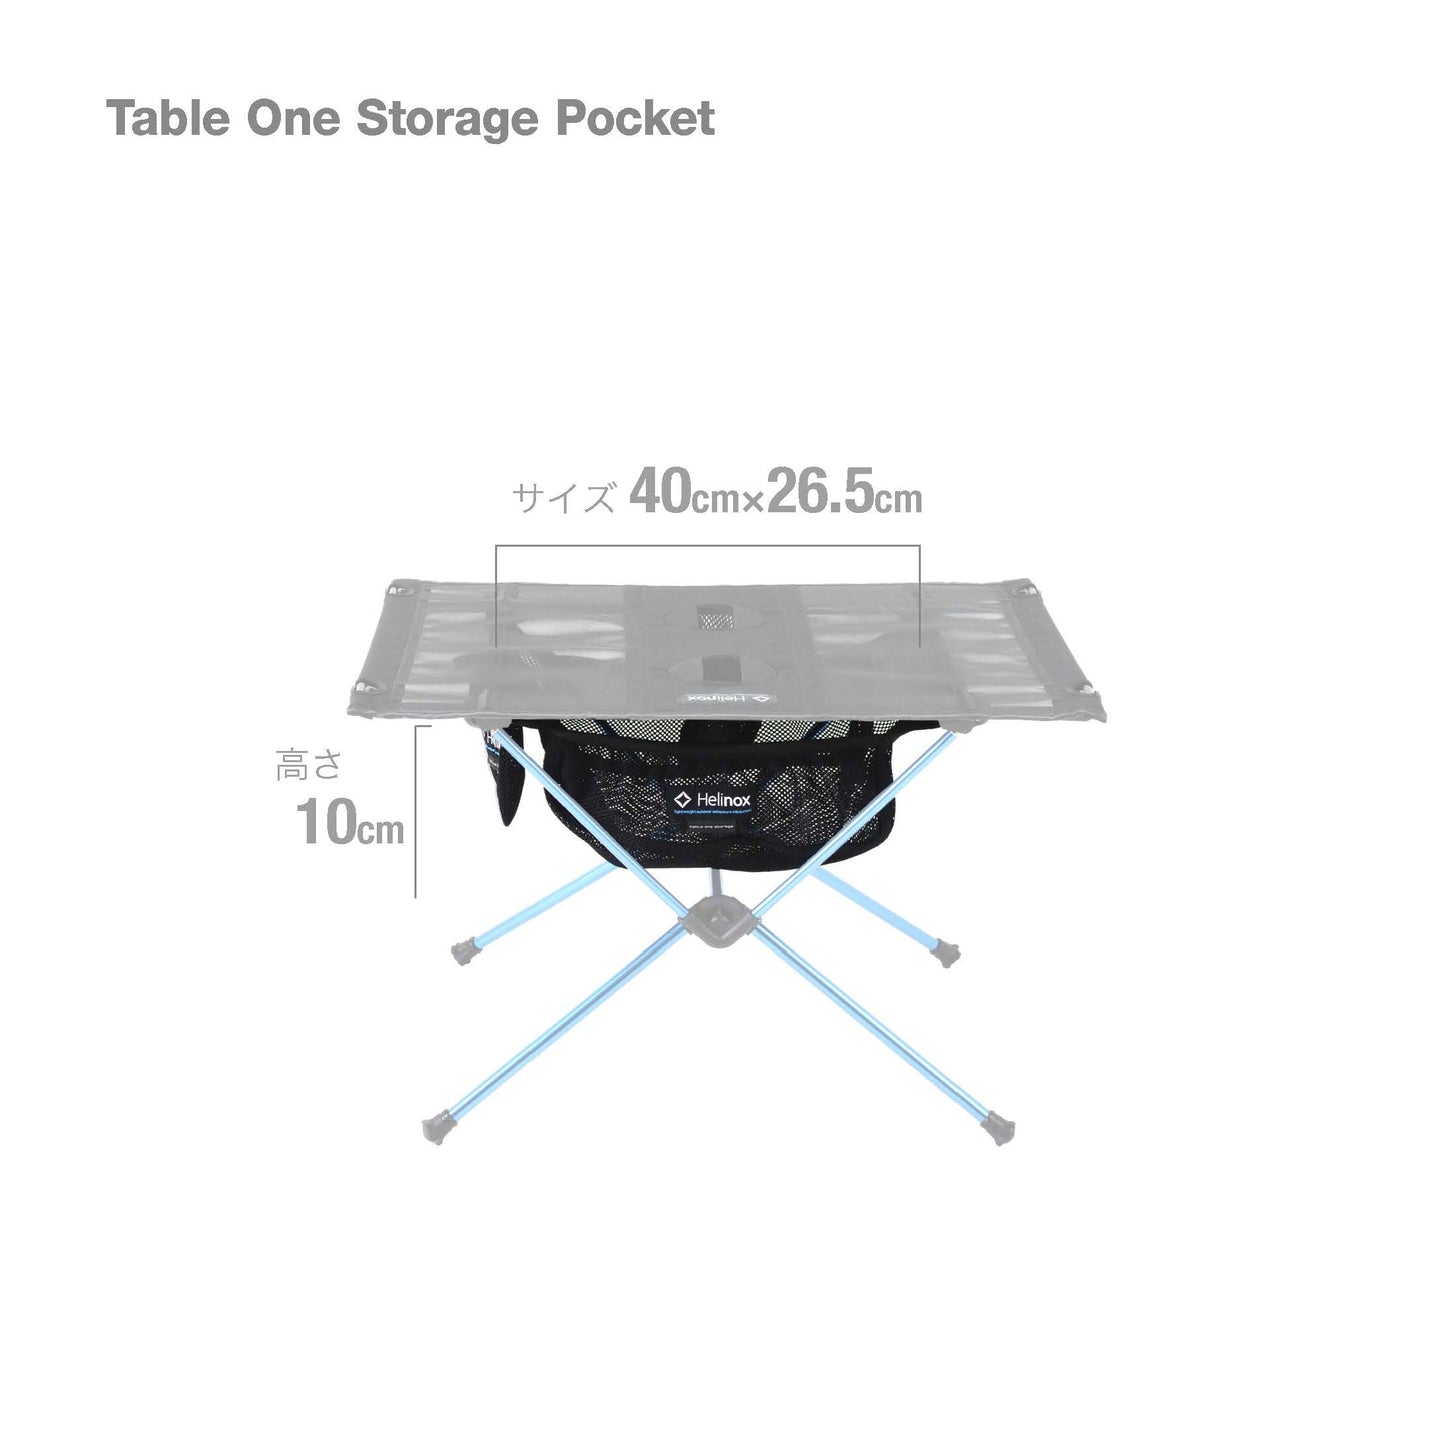 Table One Storage Pocket - Black